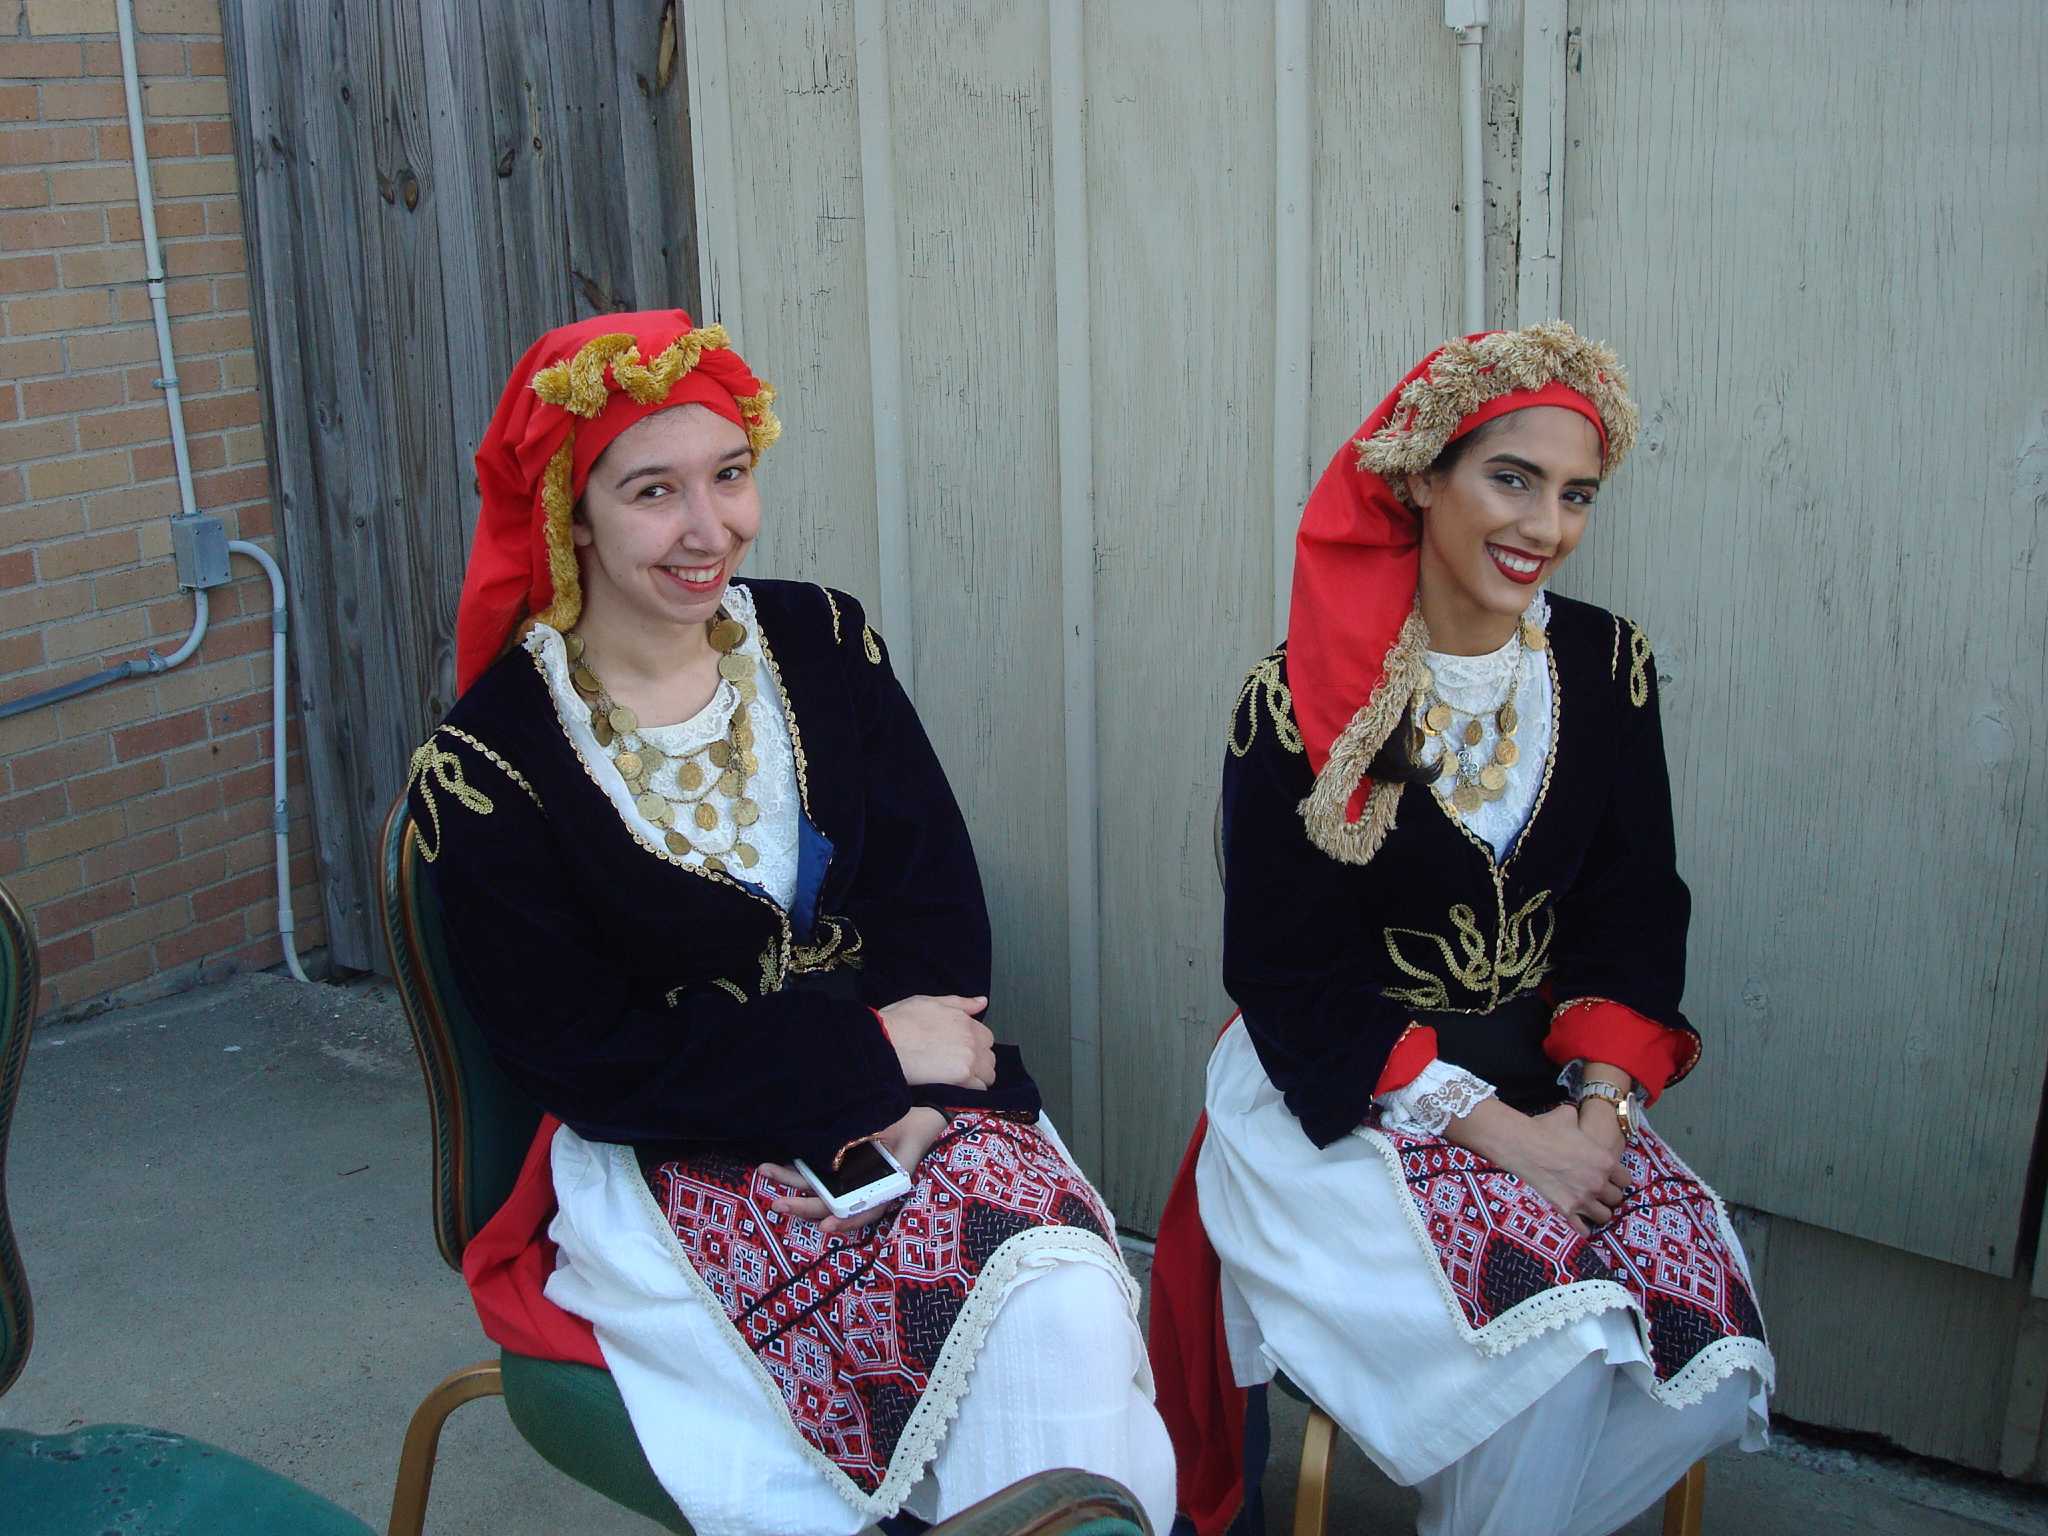 Greek Festival celebrates tradition in Galveston